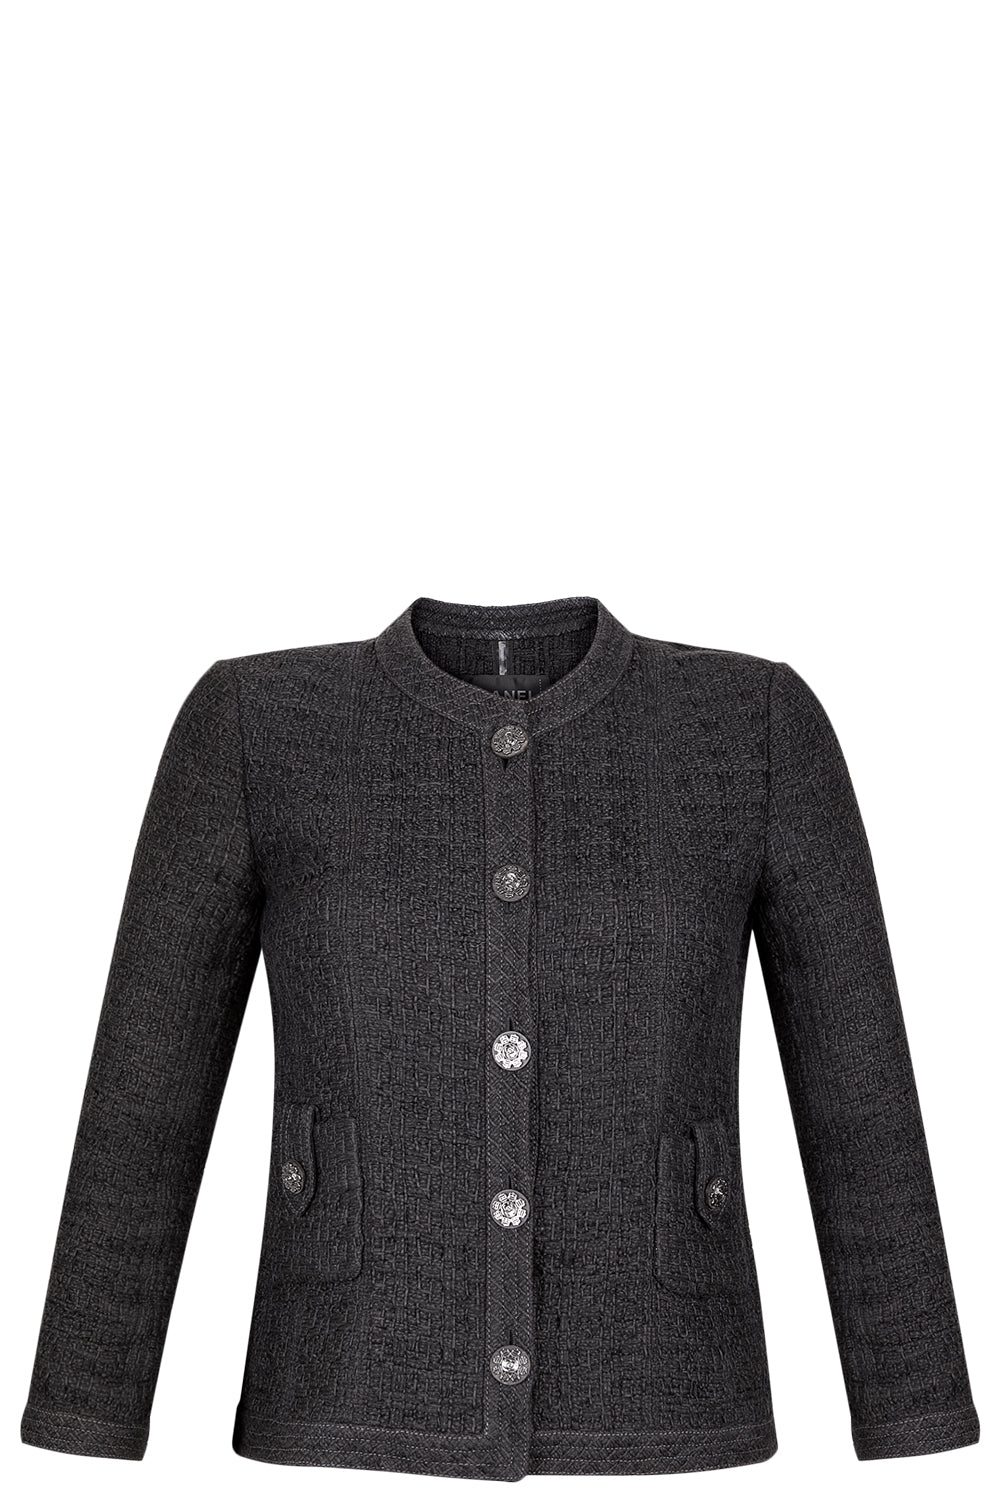 Chanel Jacket 16 Cotton Silk Black